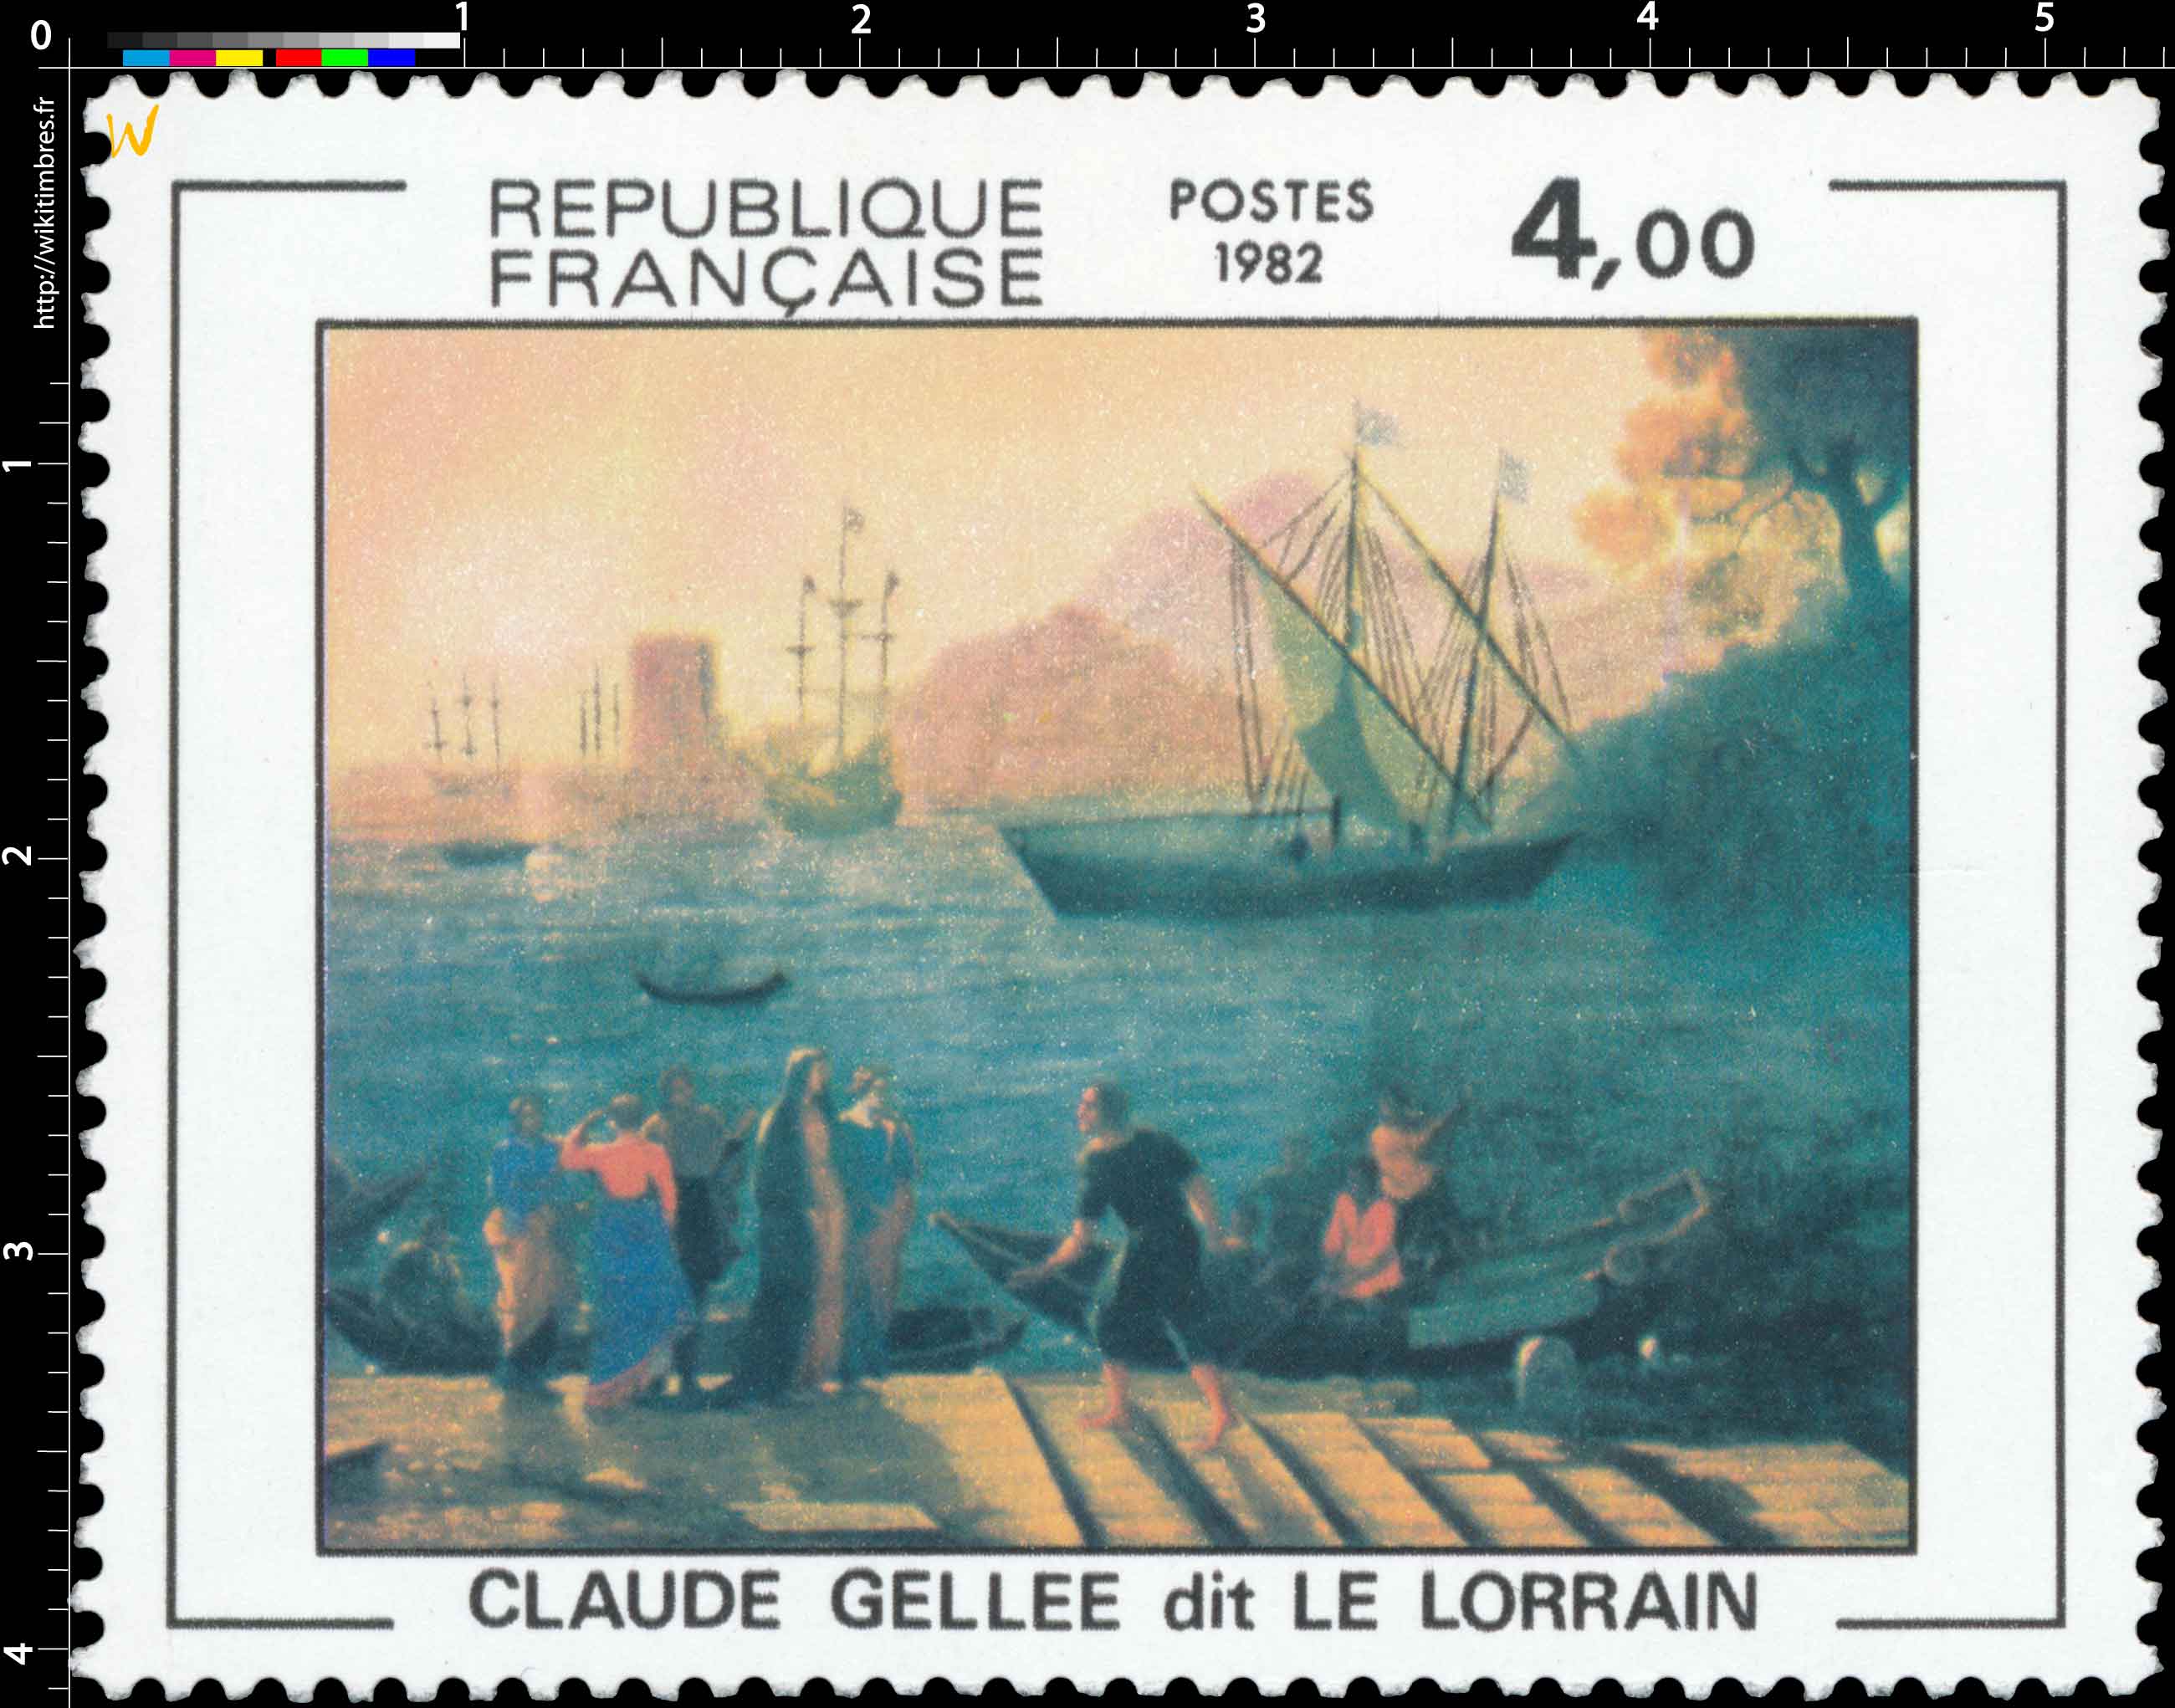 1982 CLAUDE GELLÉE dit LE LORRAIN